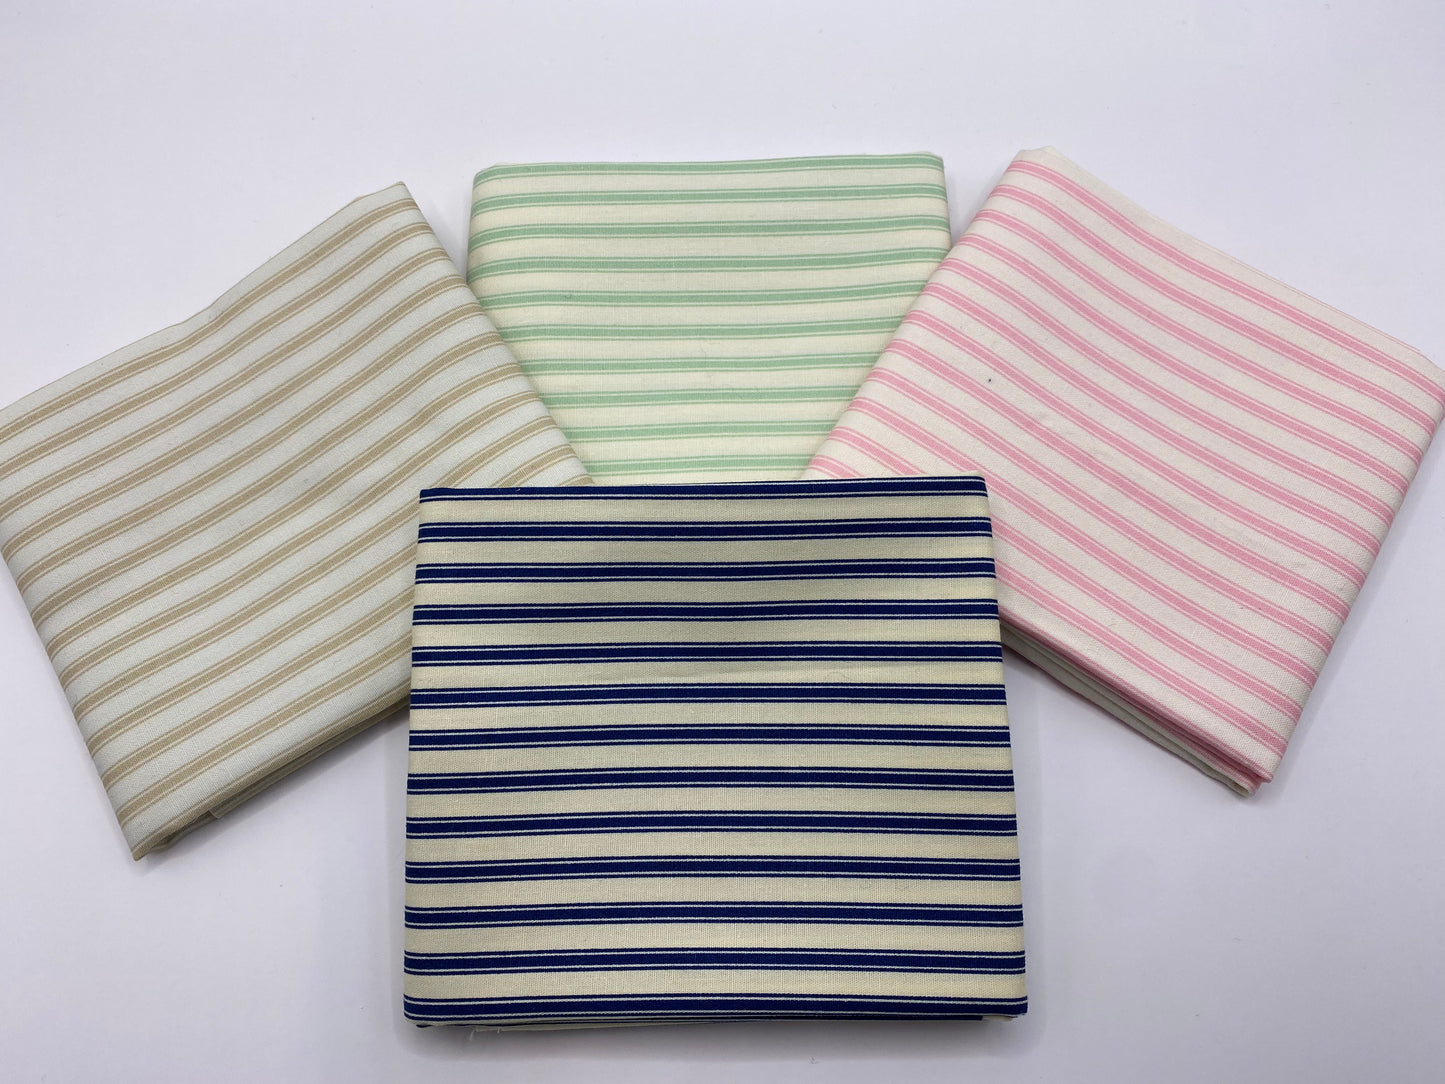 Fabric Fat Quarter Bundle - 'Stripes' - 100% Cotton Fabric